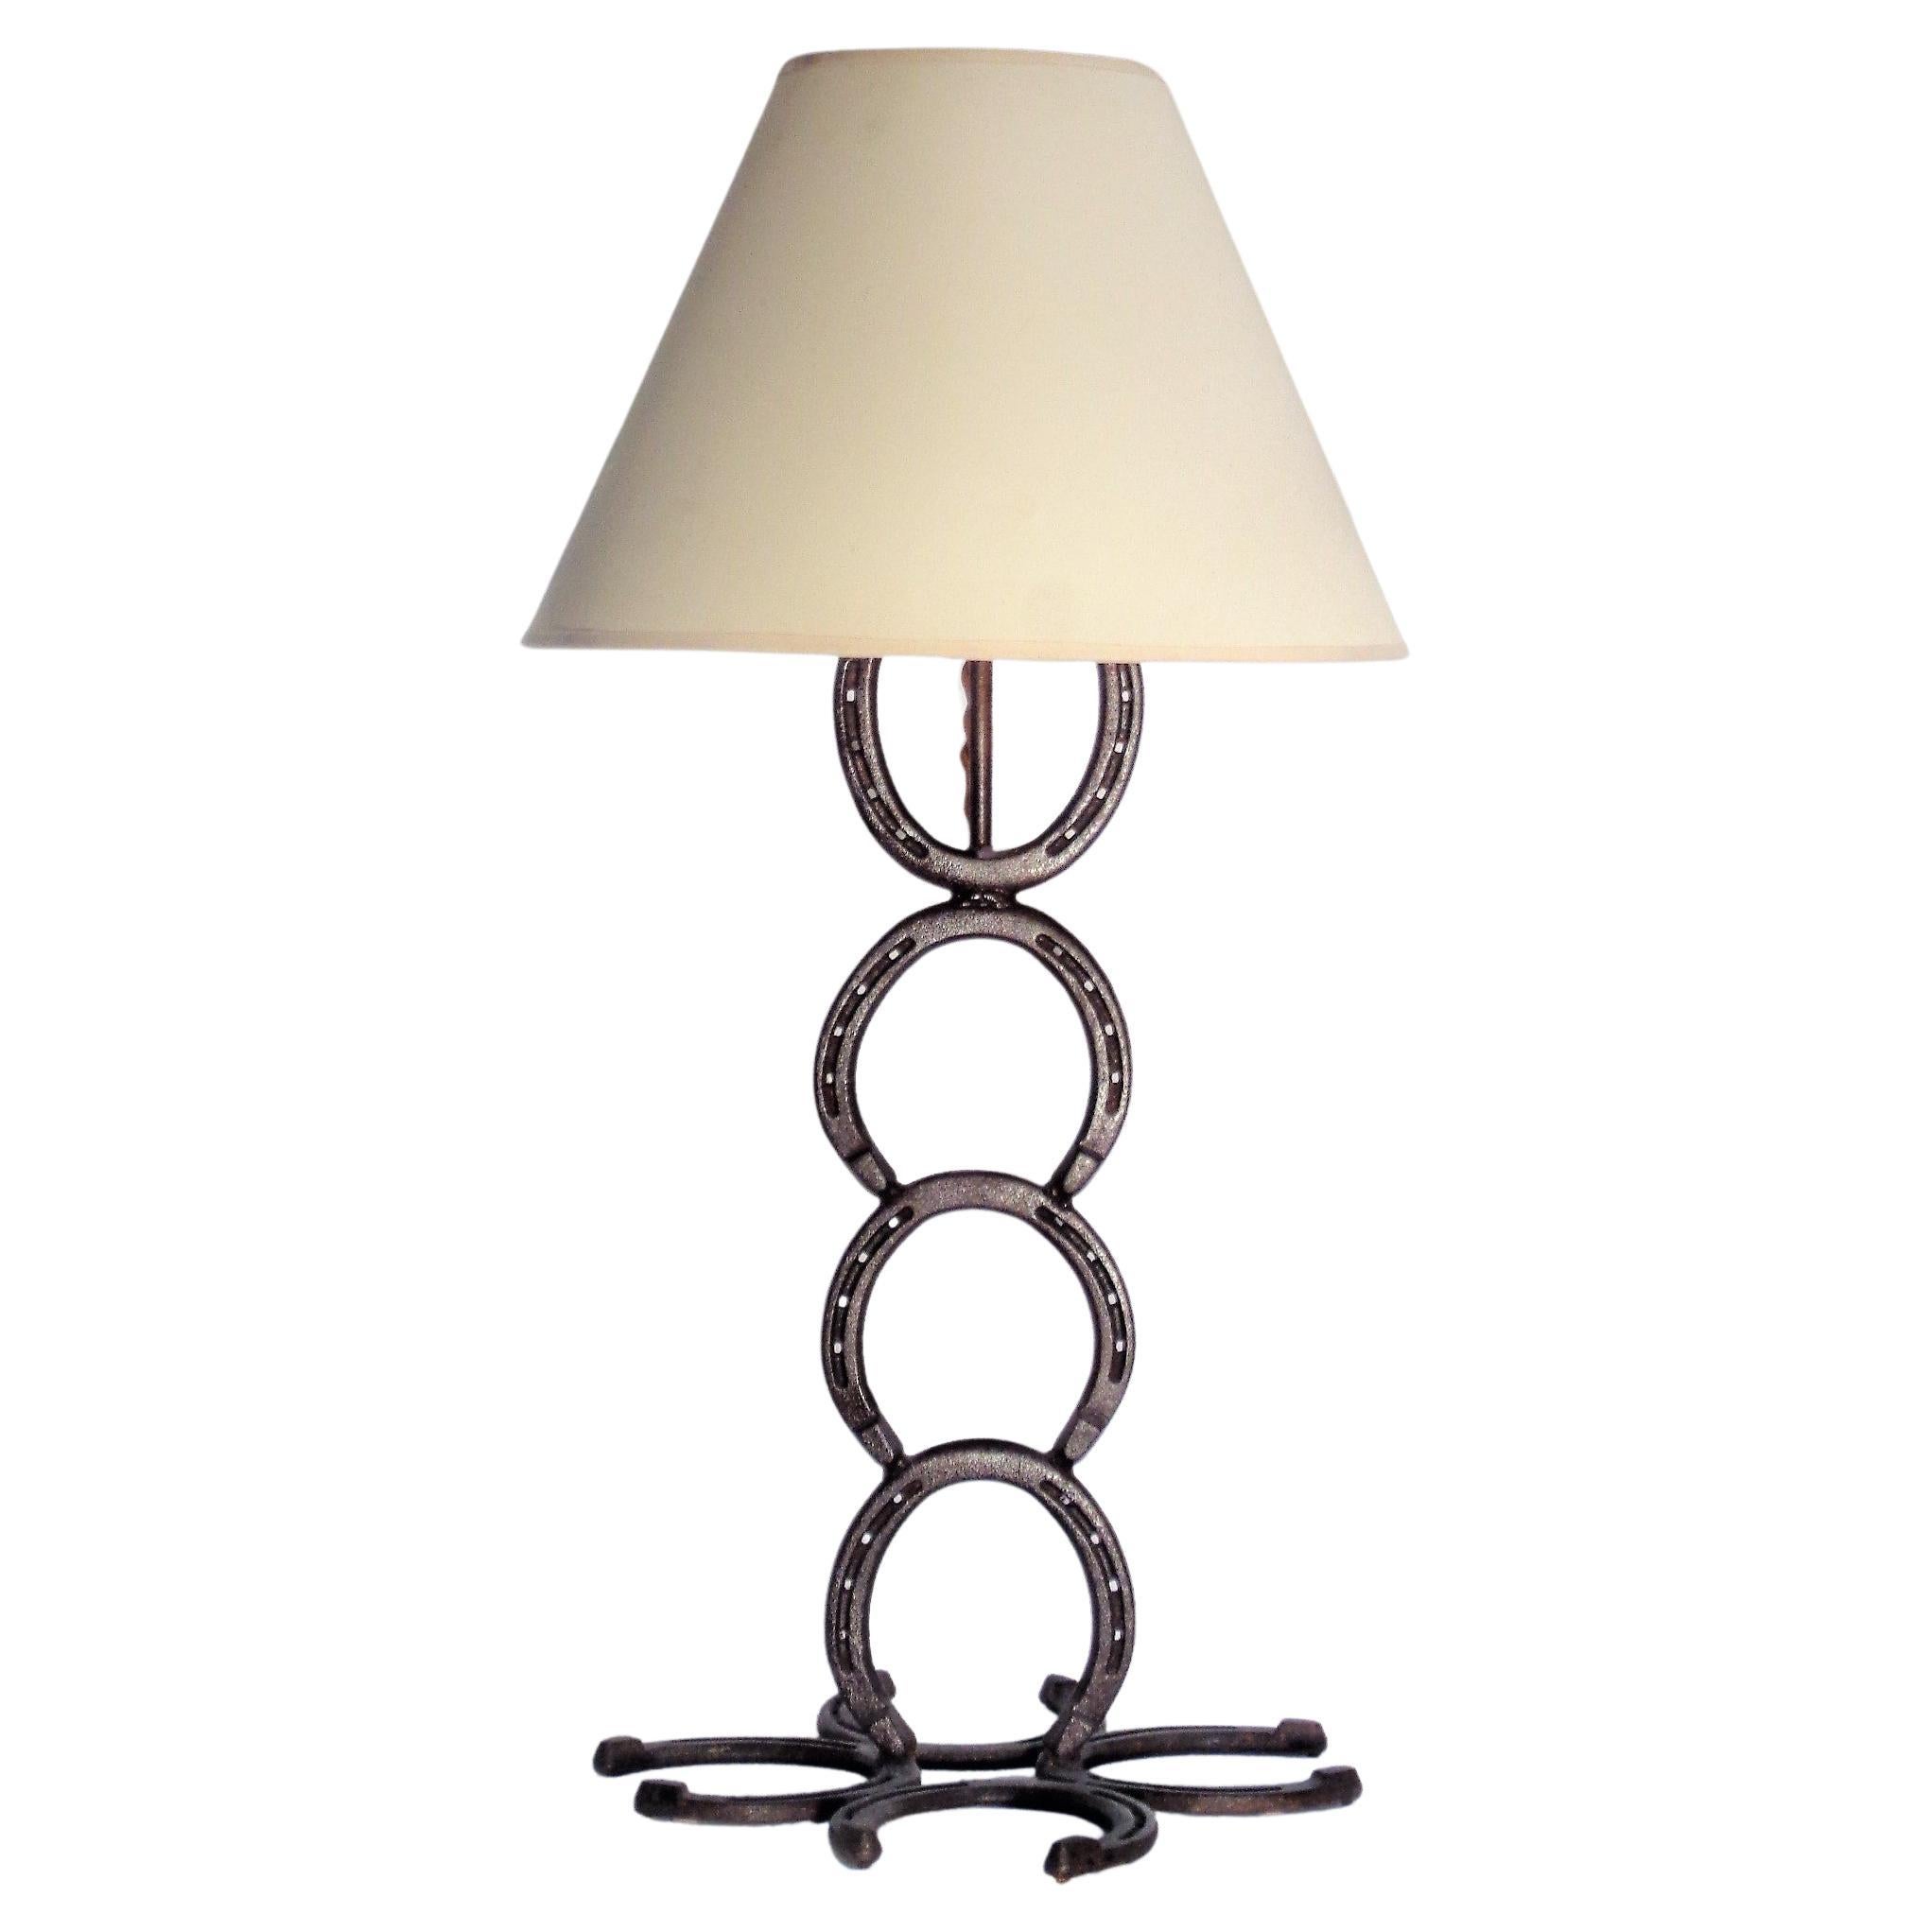  Iron Horseshoe Table Lamp For Sale